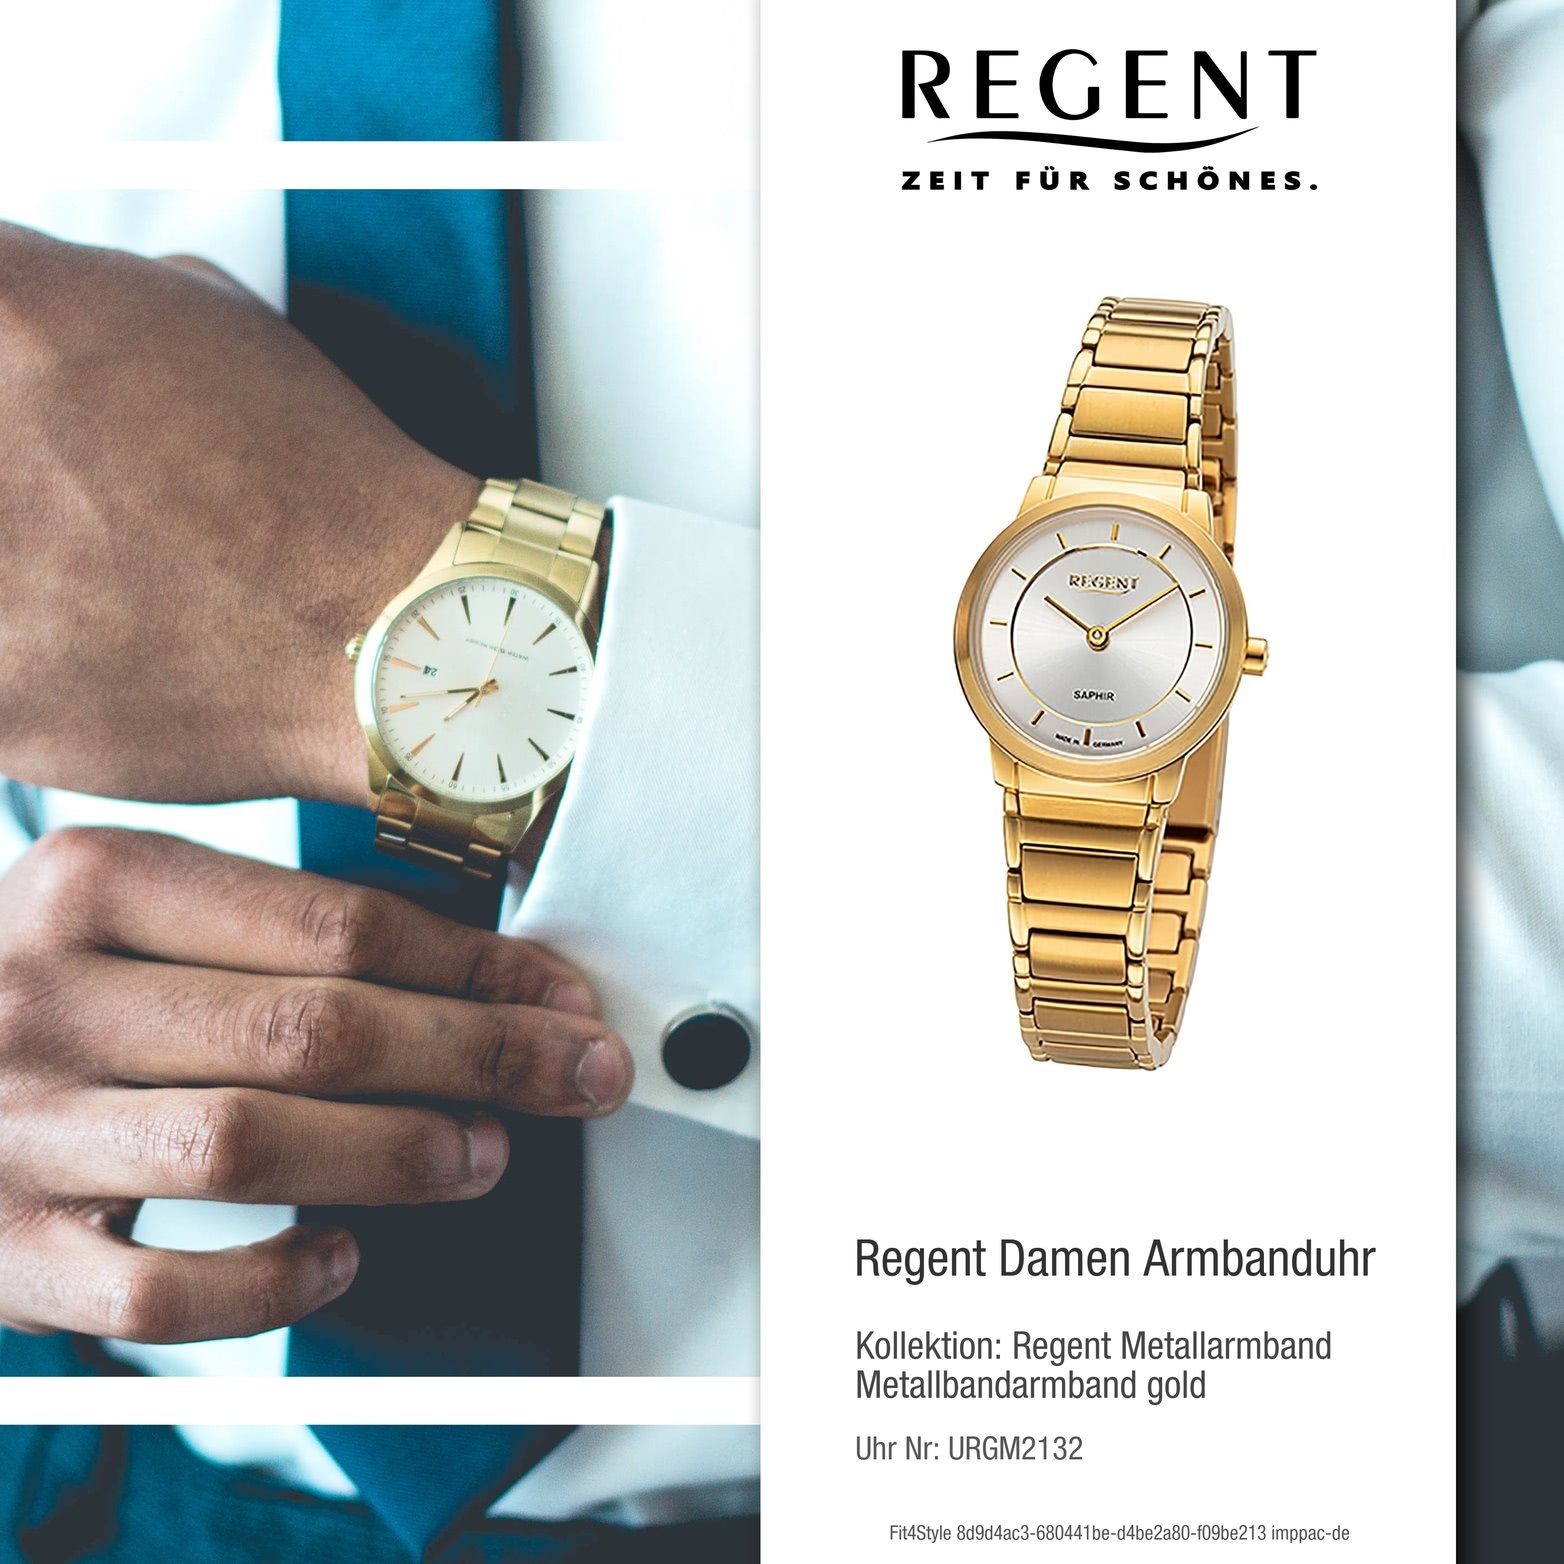 Regent klein Damen Damenuhr Gehäuse, gold, rundes Metallbandarmband 26,5mm) Armbanduhr (ca. Quarzuhr Analog, Regent